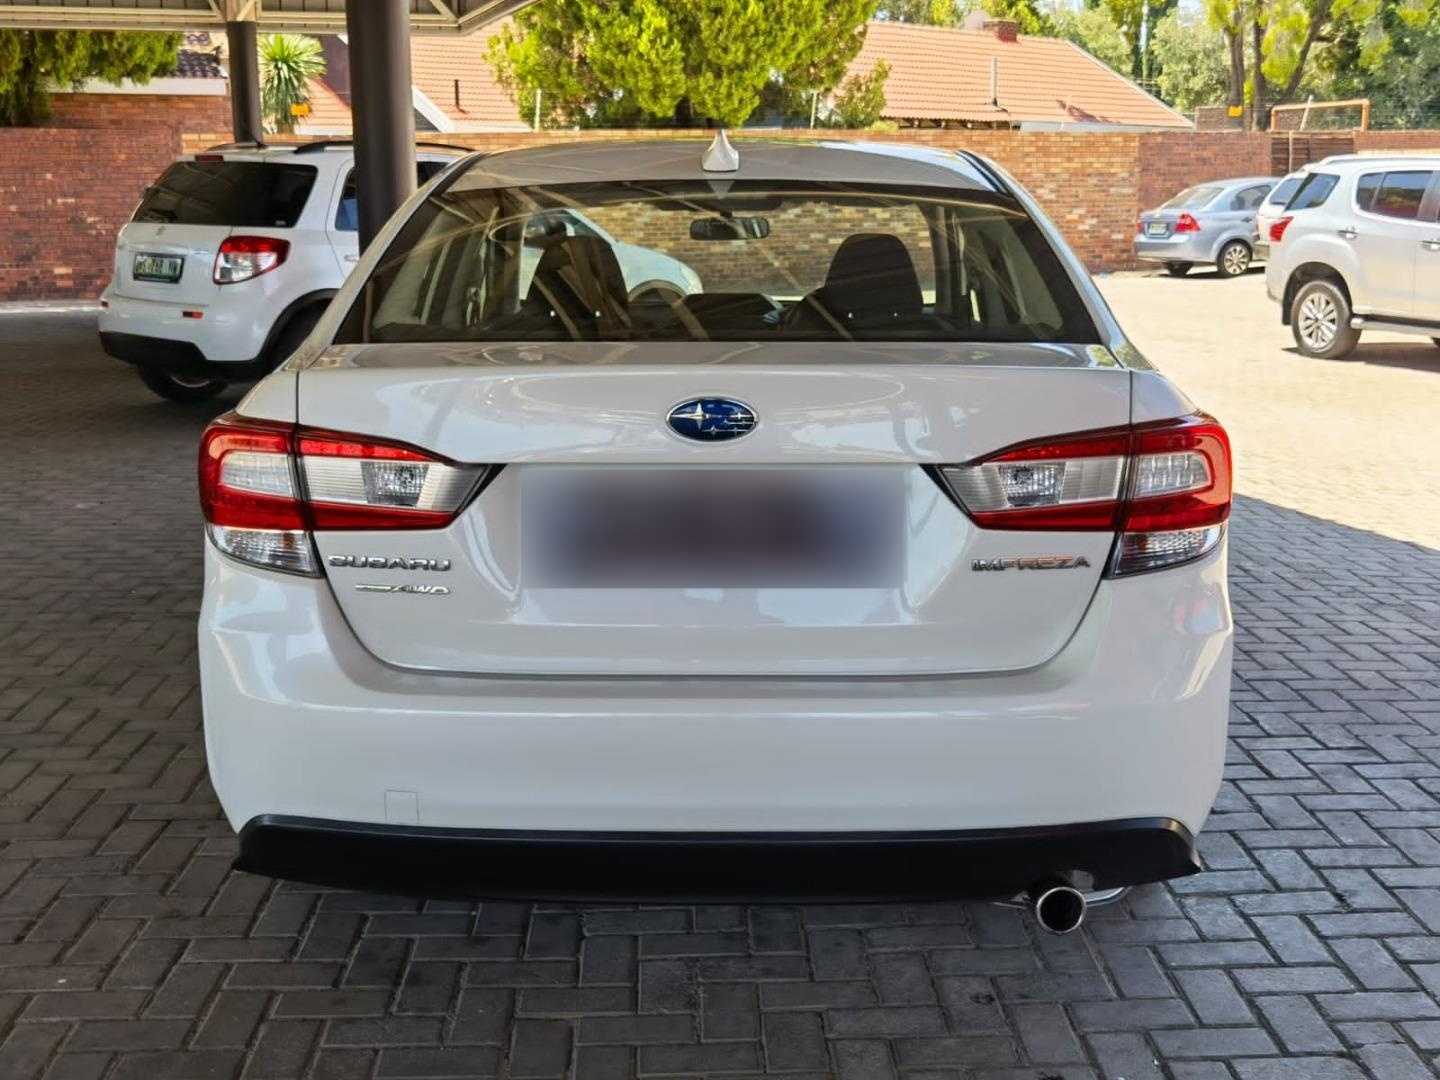 2019 Subaru Impreza rear view 